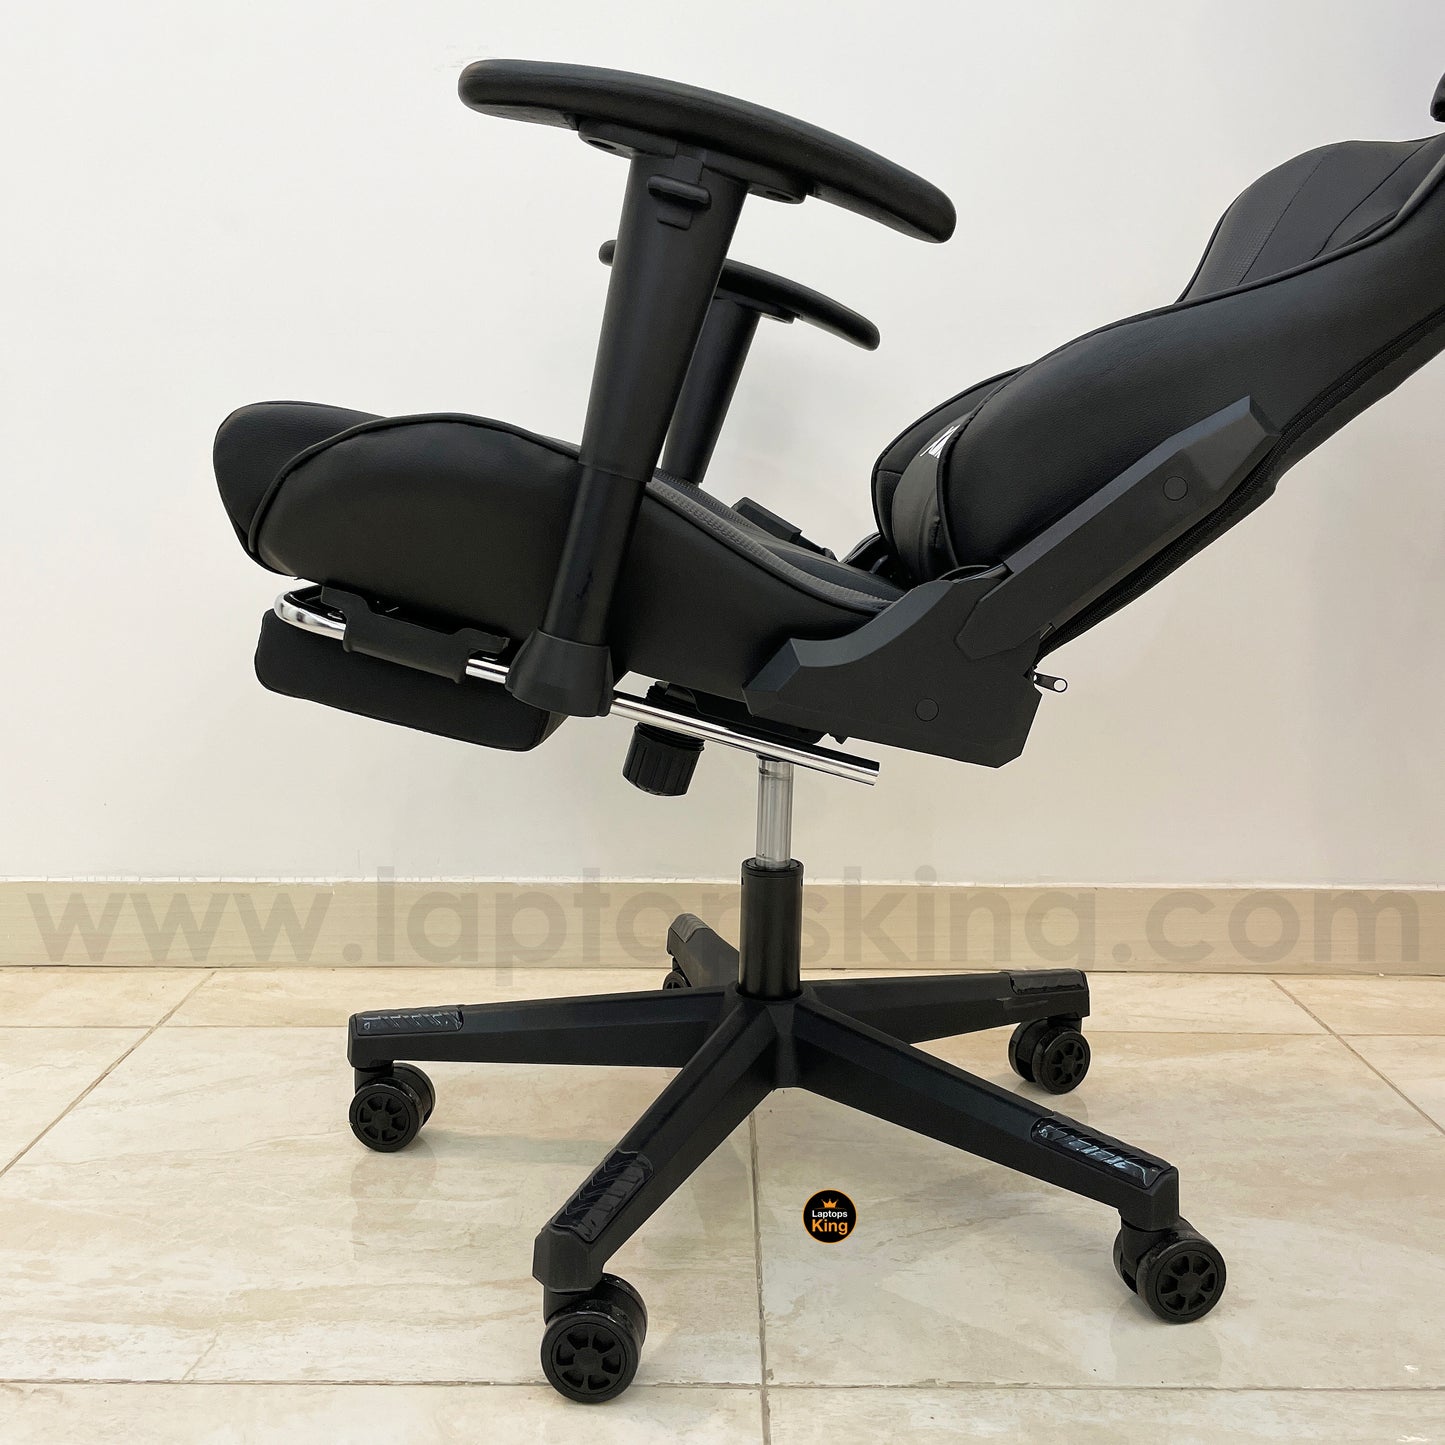 Xline X101 High Quality Gaming Chair (Brand New)